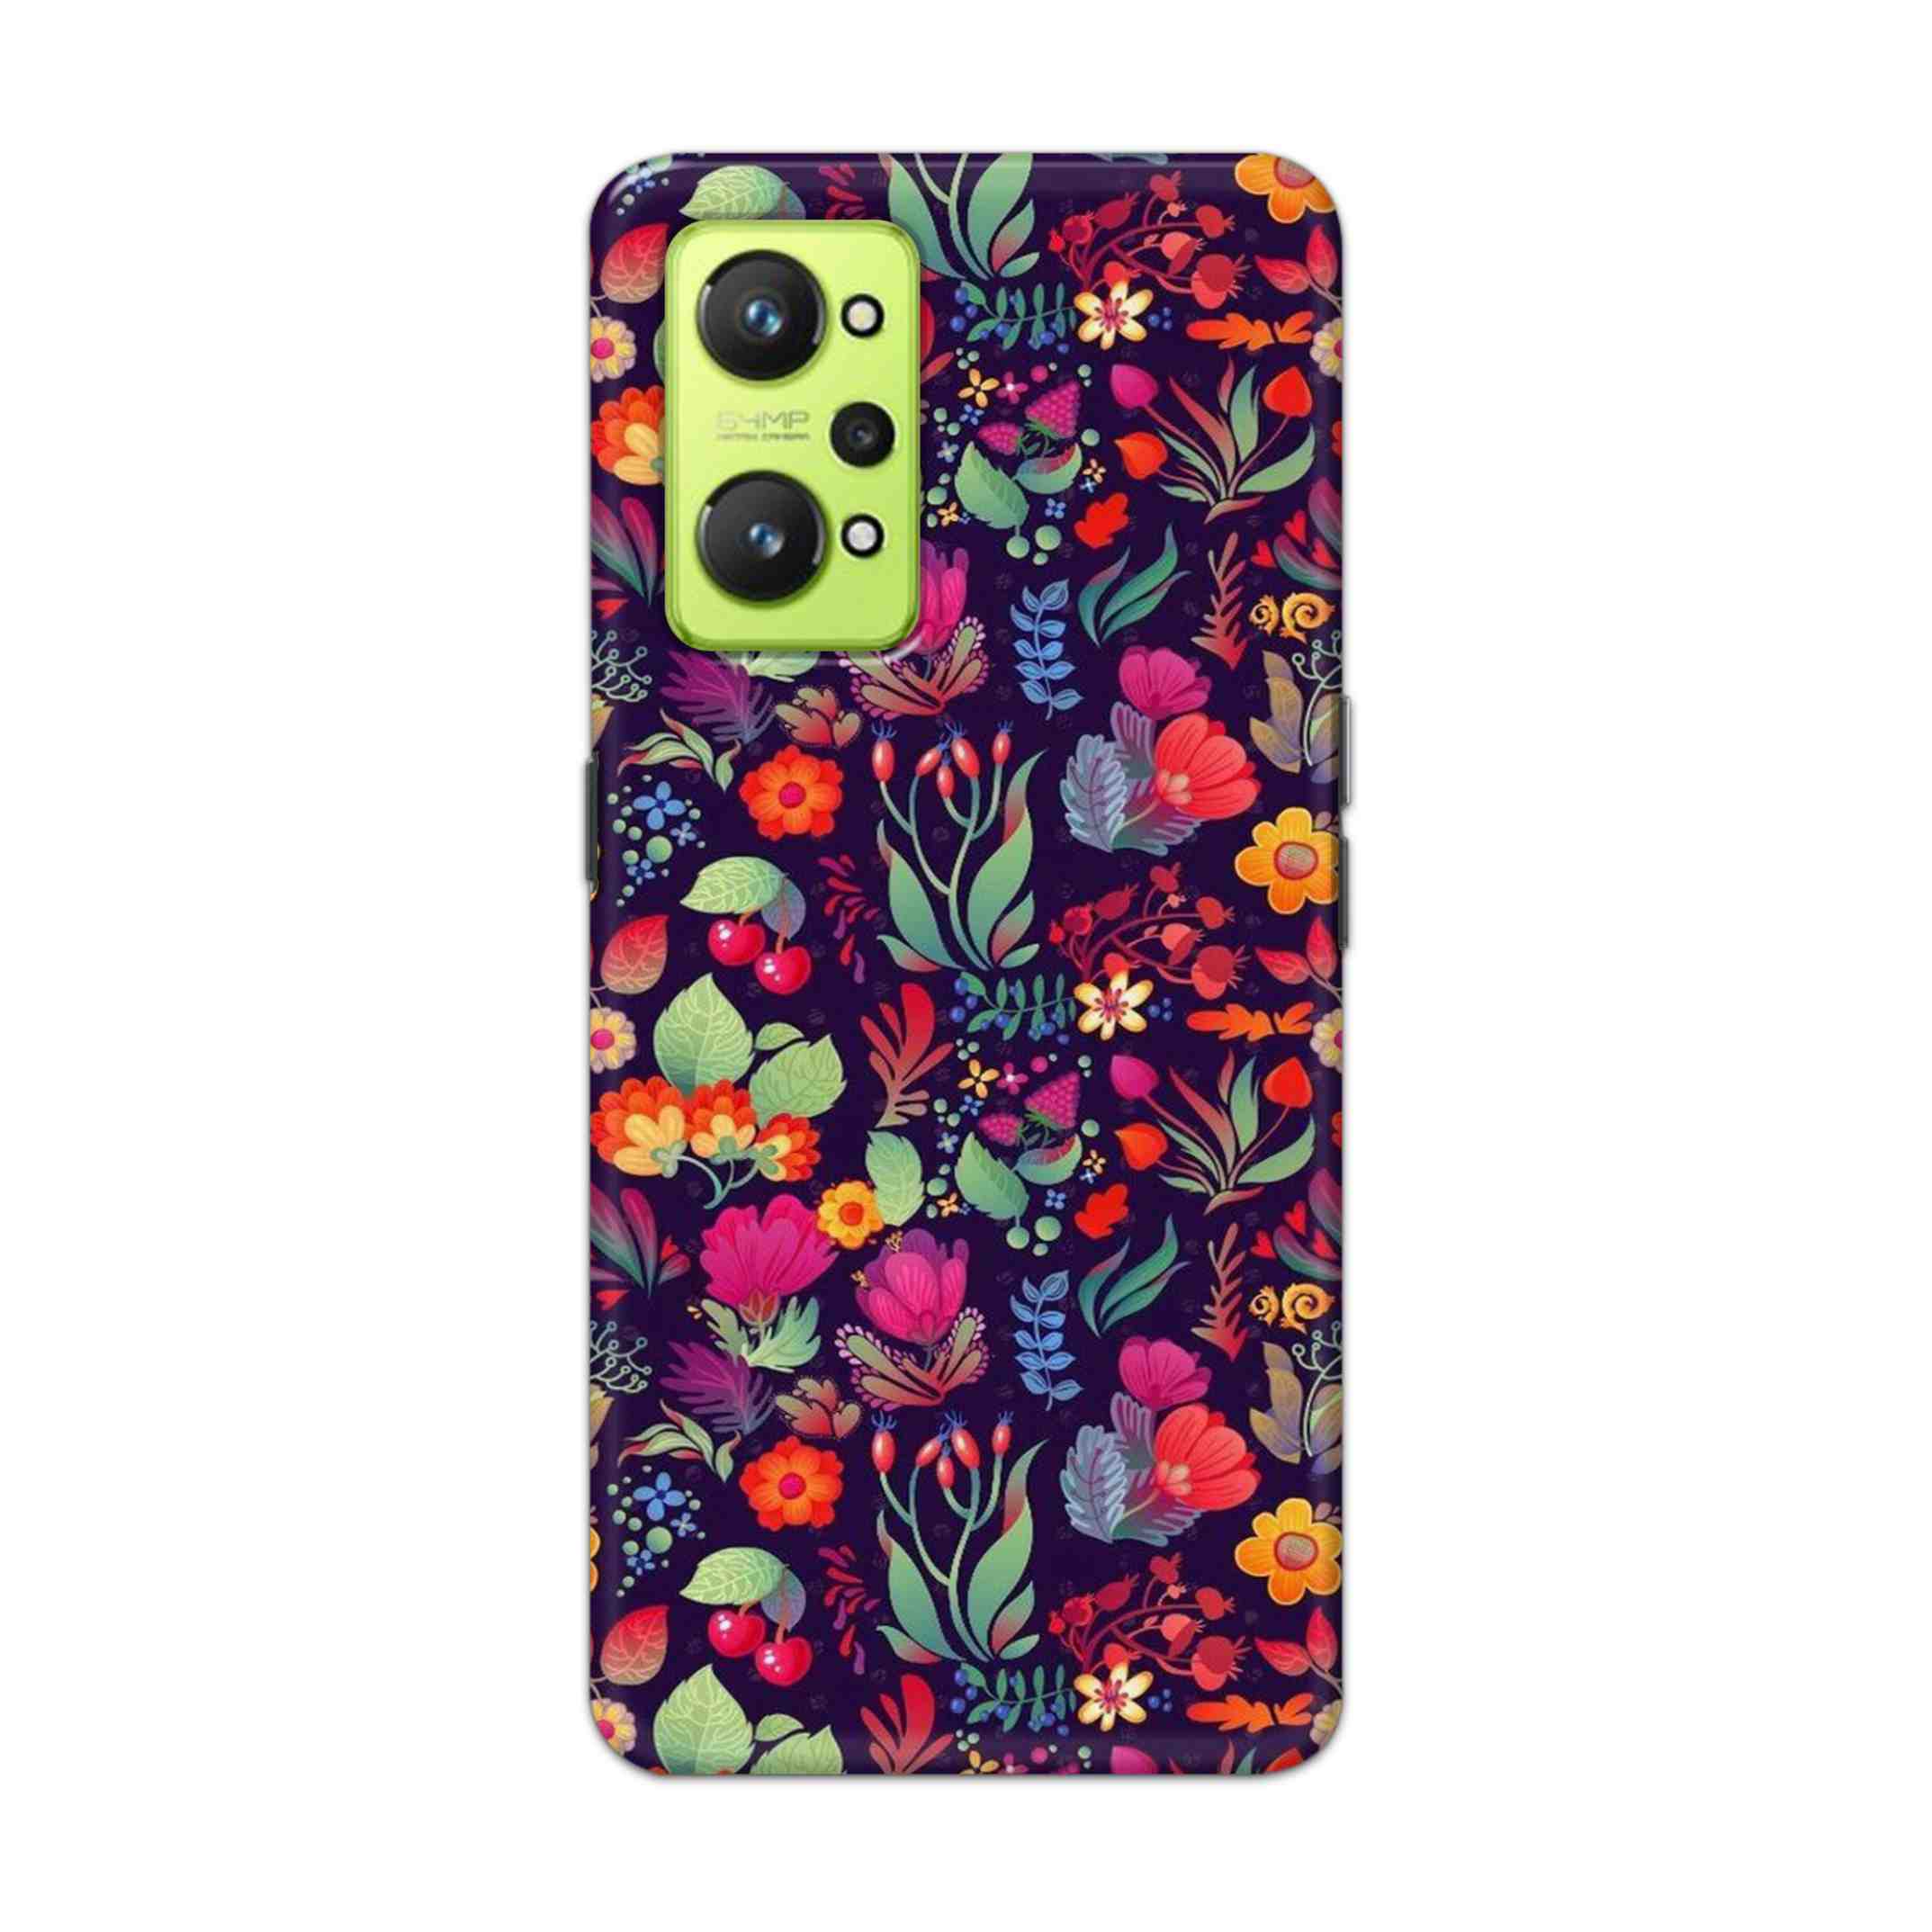 Buy Fruits Flower Hard Back Mobile Phone Case Cover For Realme GT Neo2 Online